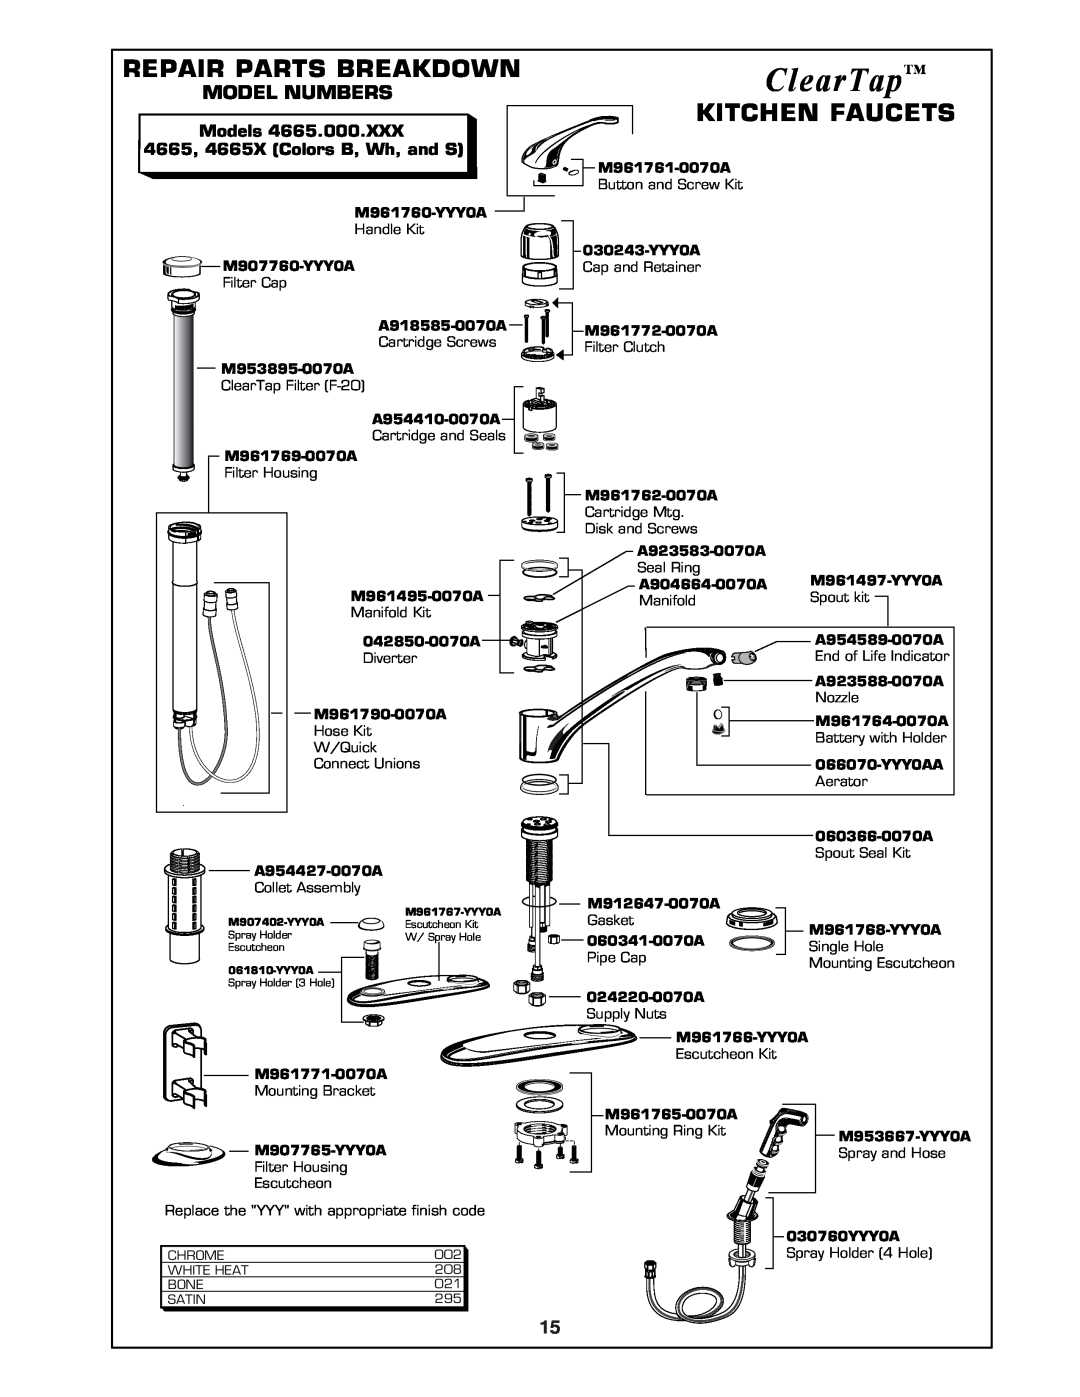 American Standard 4665X manual ClearTap, Repair Parts Breakdown, Kitchen Faucets, Model Numbers, Models 